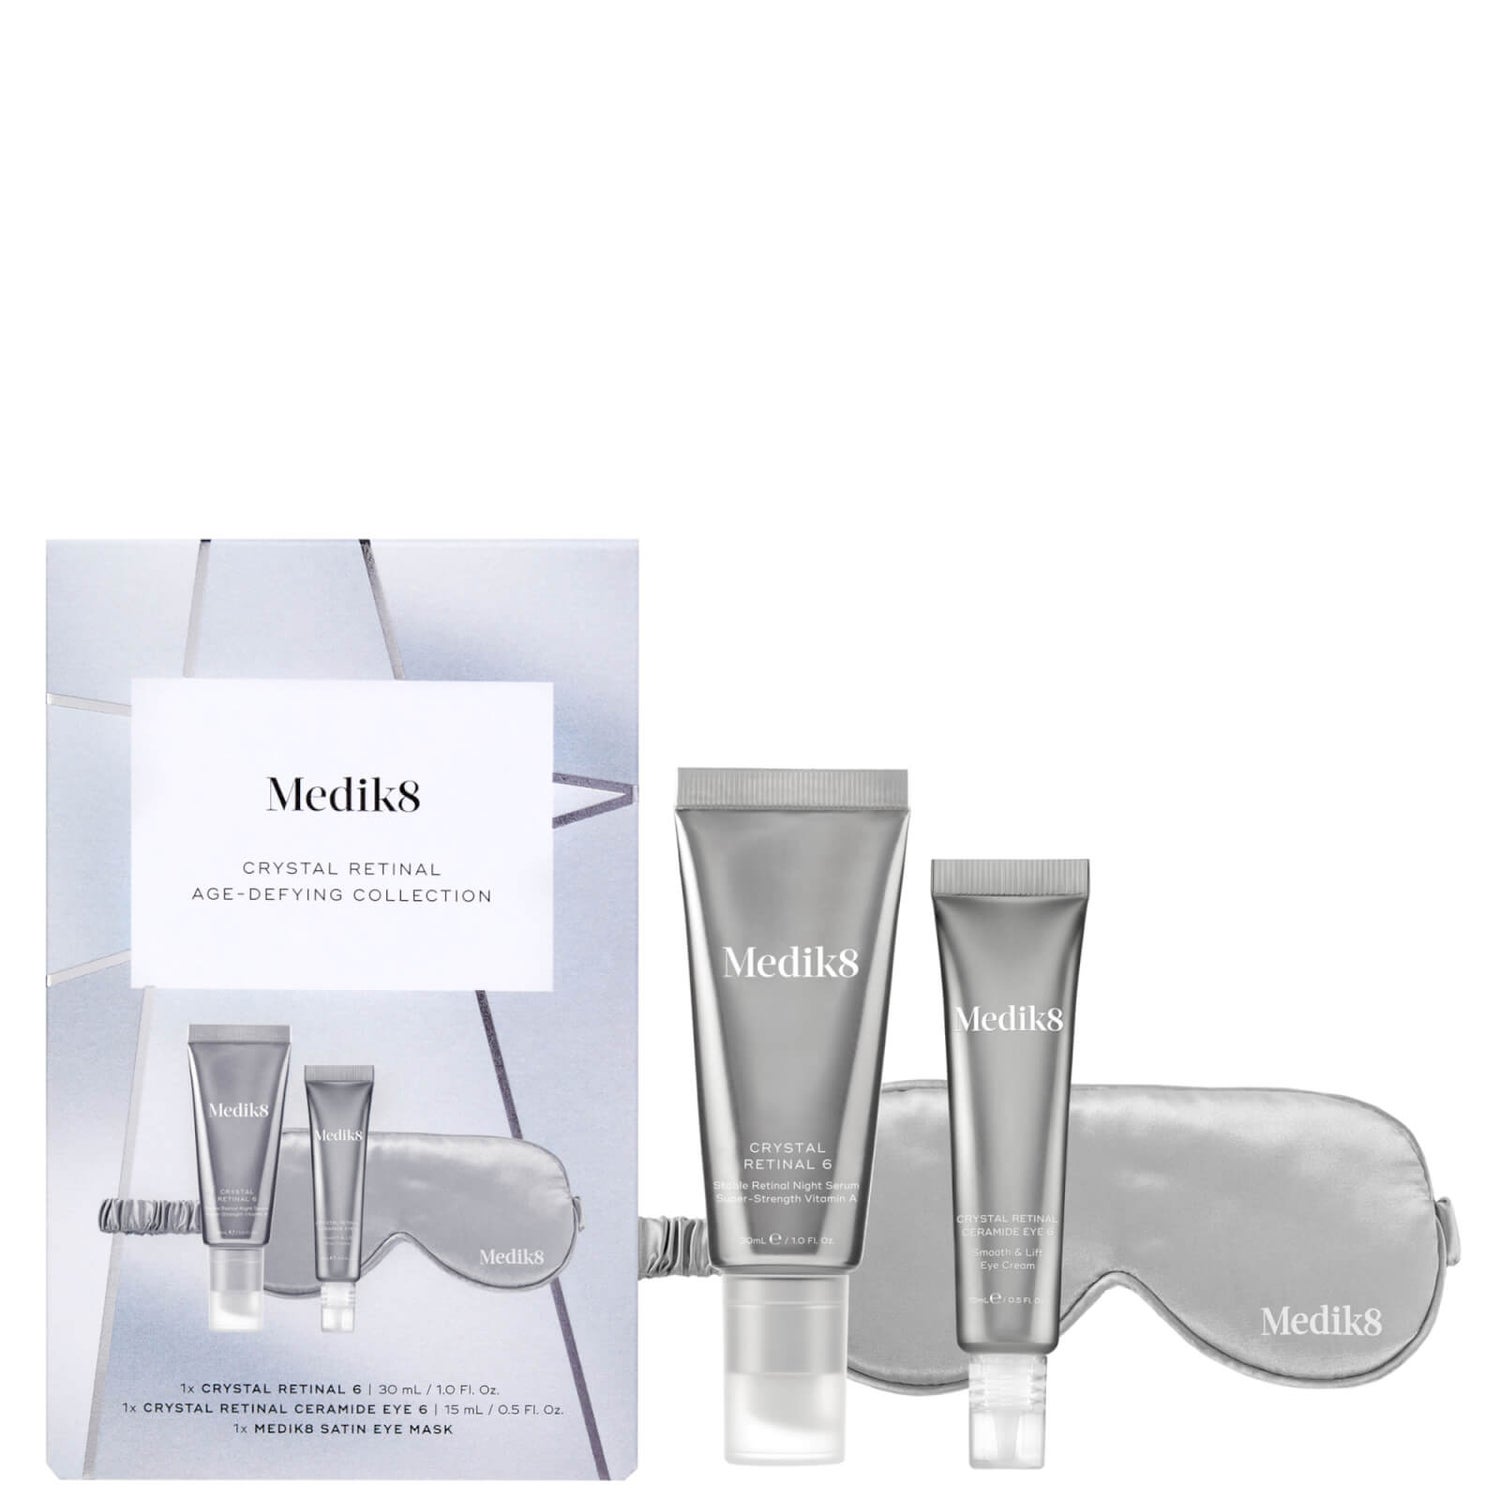 Medik8 Crystal Retinal Age-Defying Collection Kit (Worth £135.00)